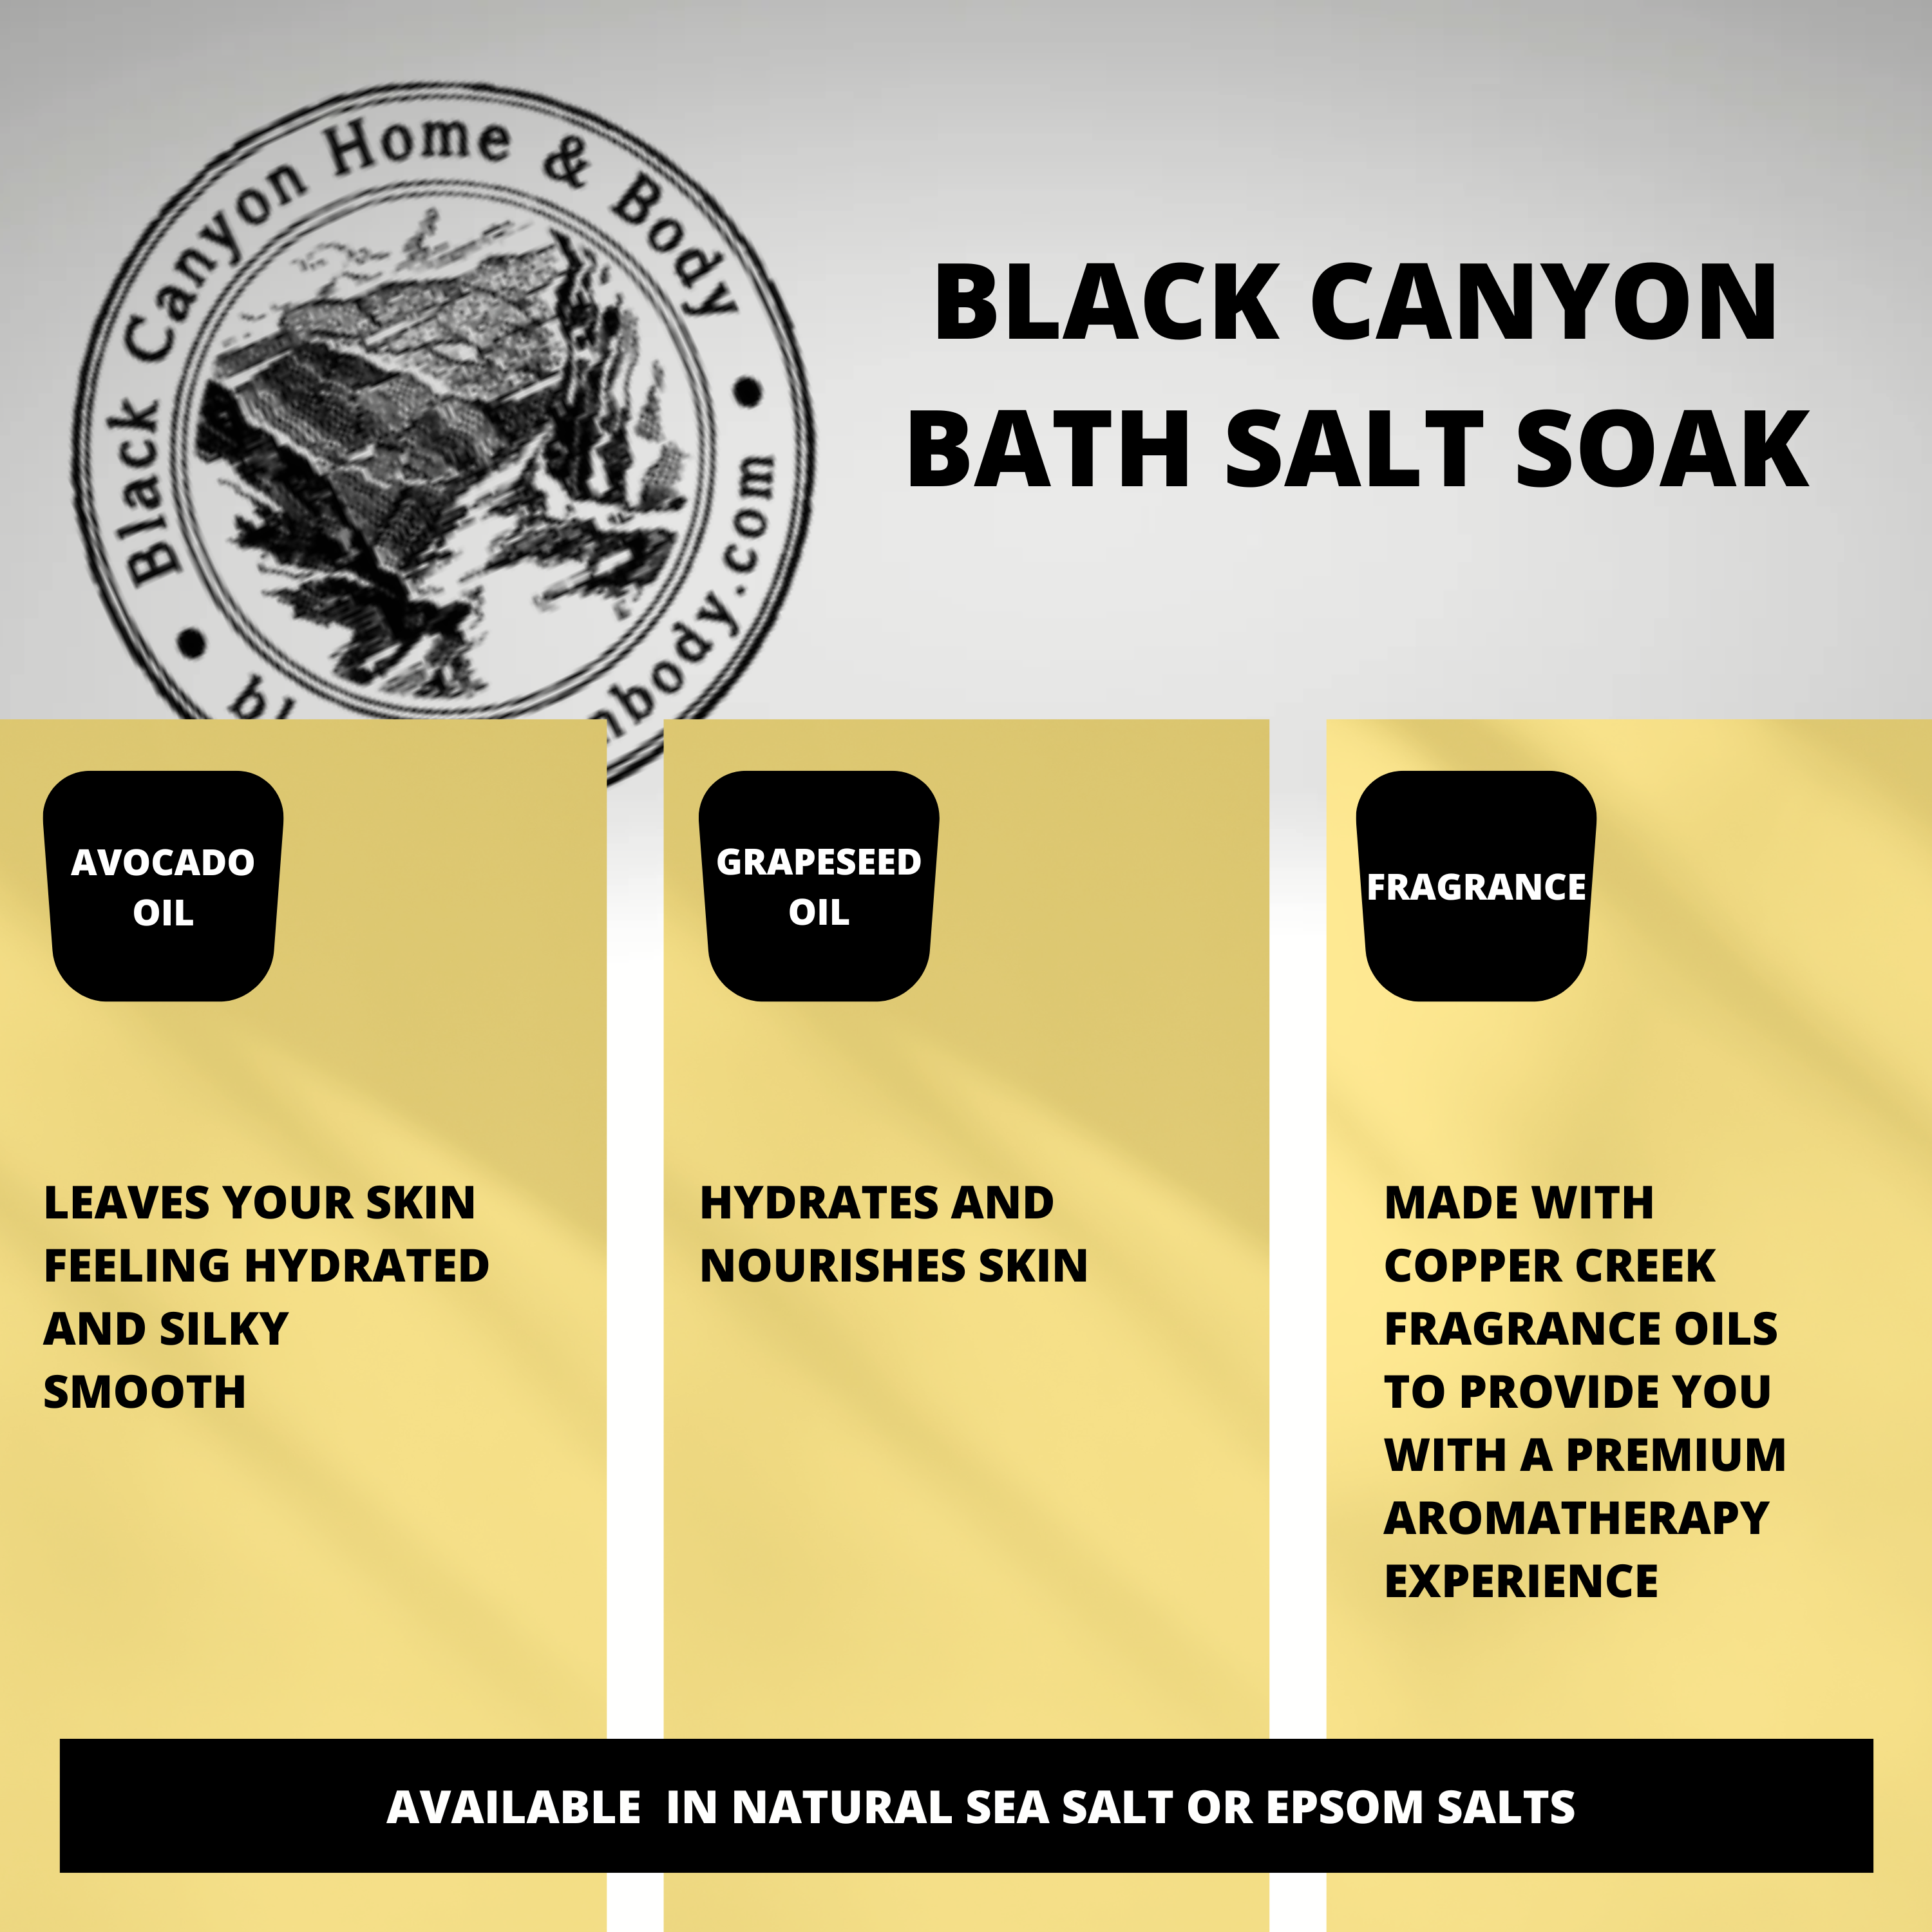 Black Canyon Friday Scented Sea Salt Bath Soak